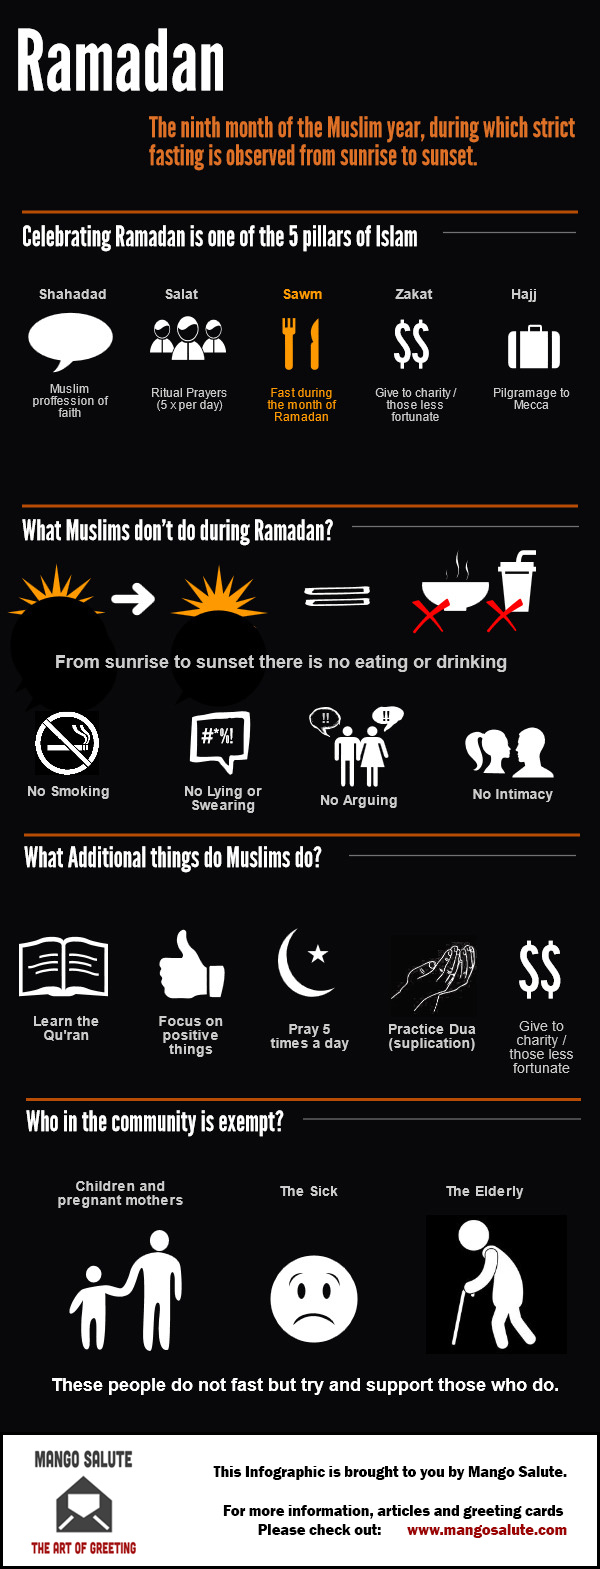 Ramadan 2016 in the UAE Infographic